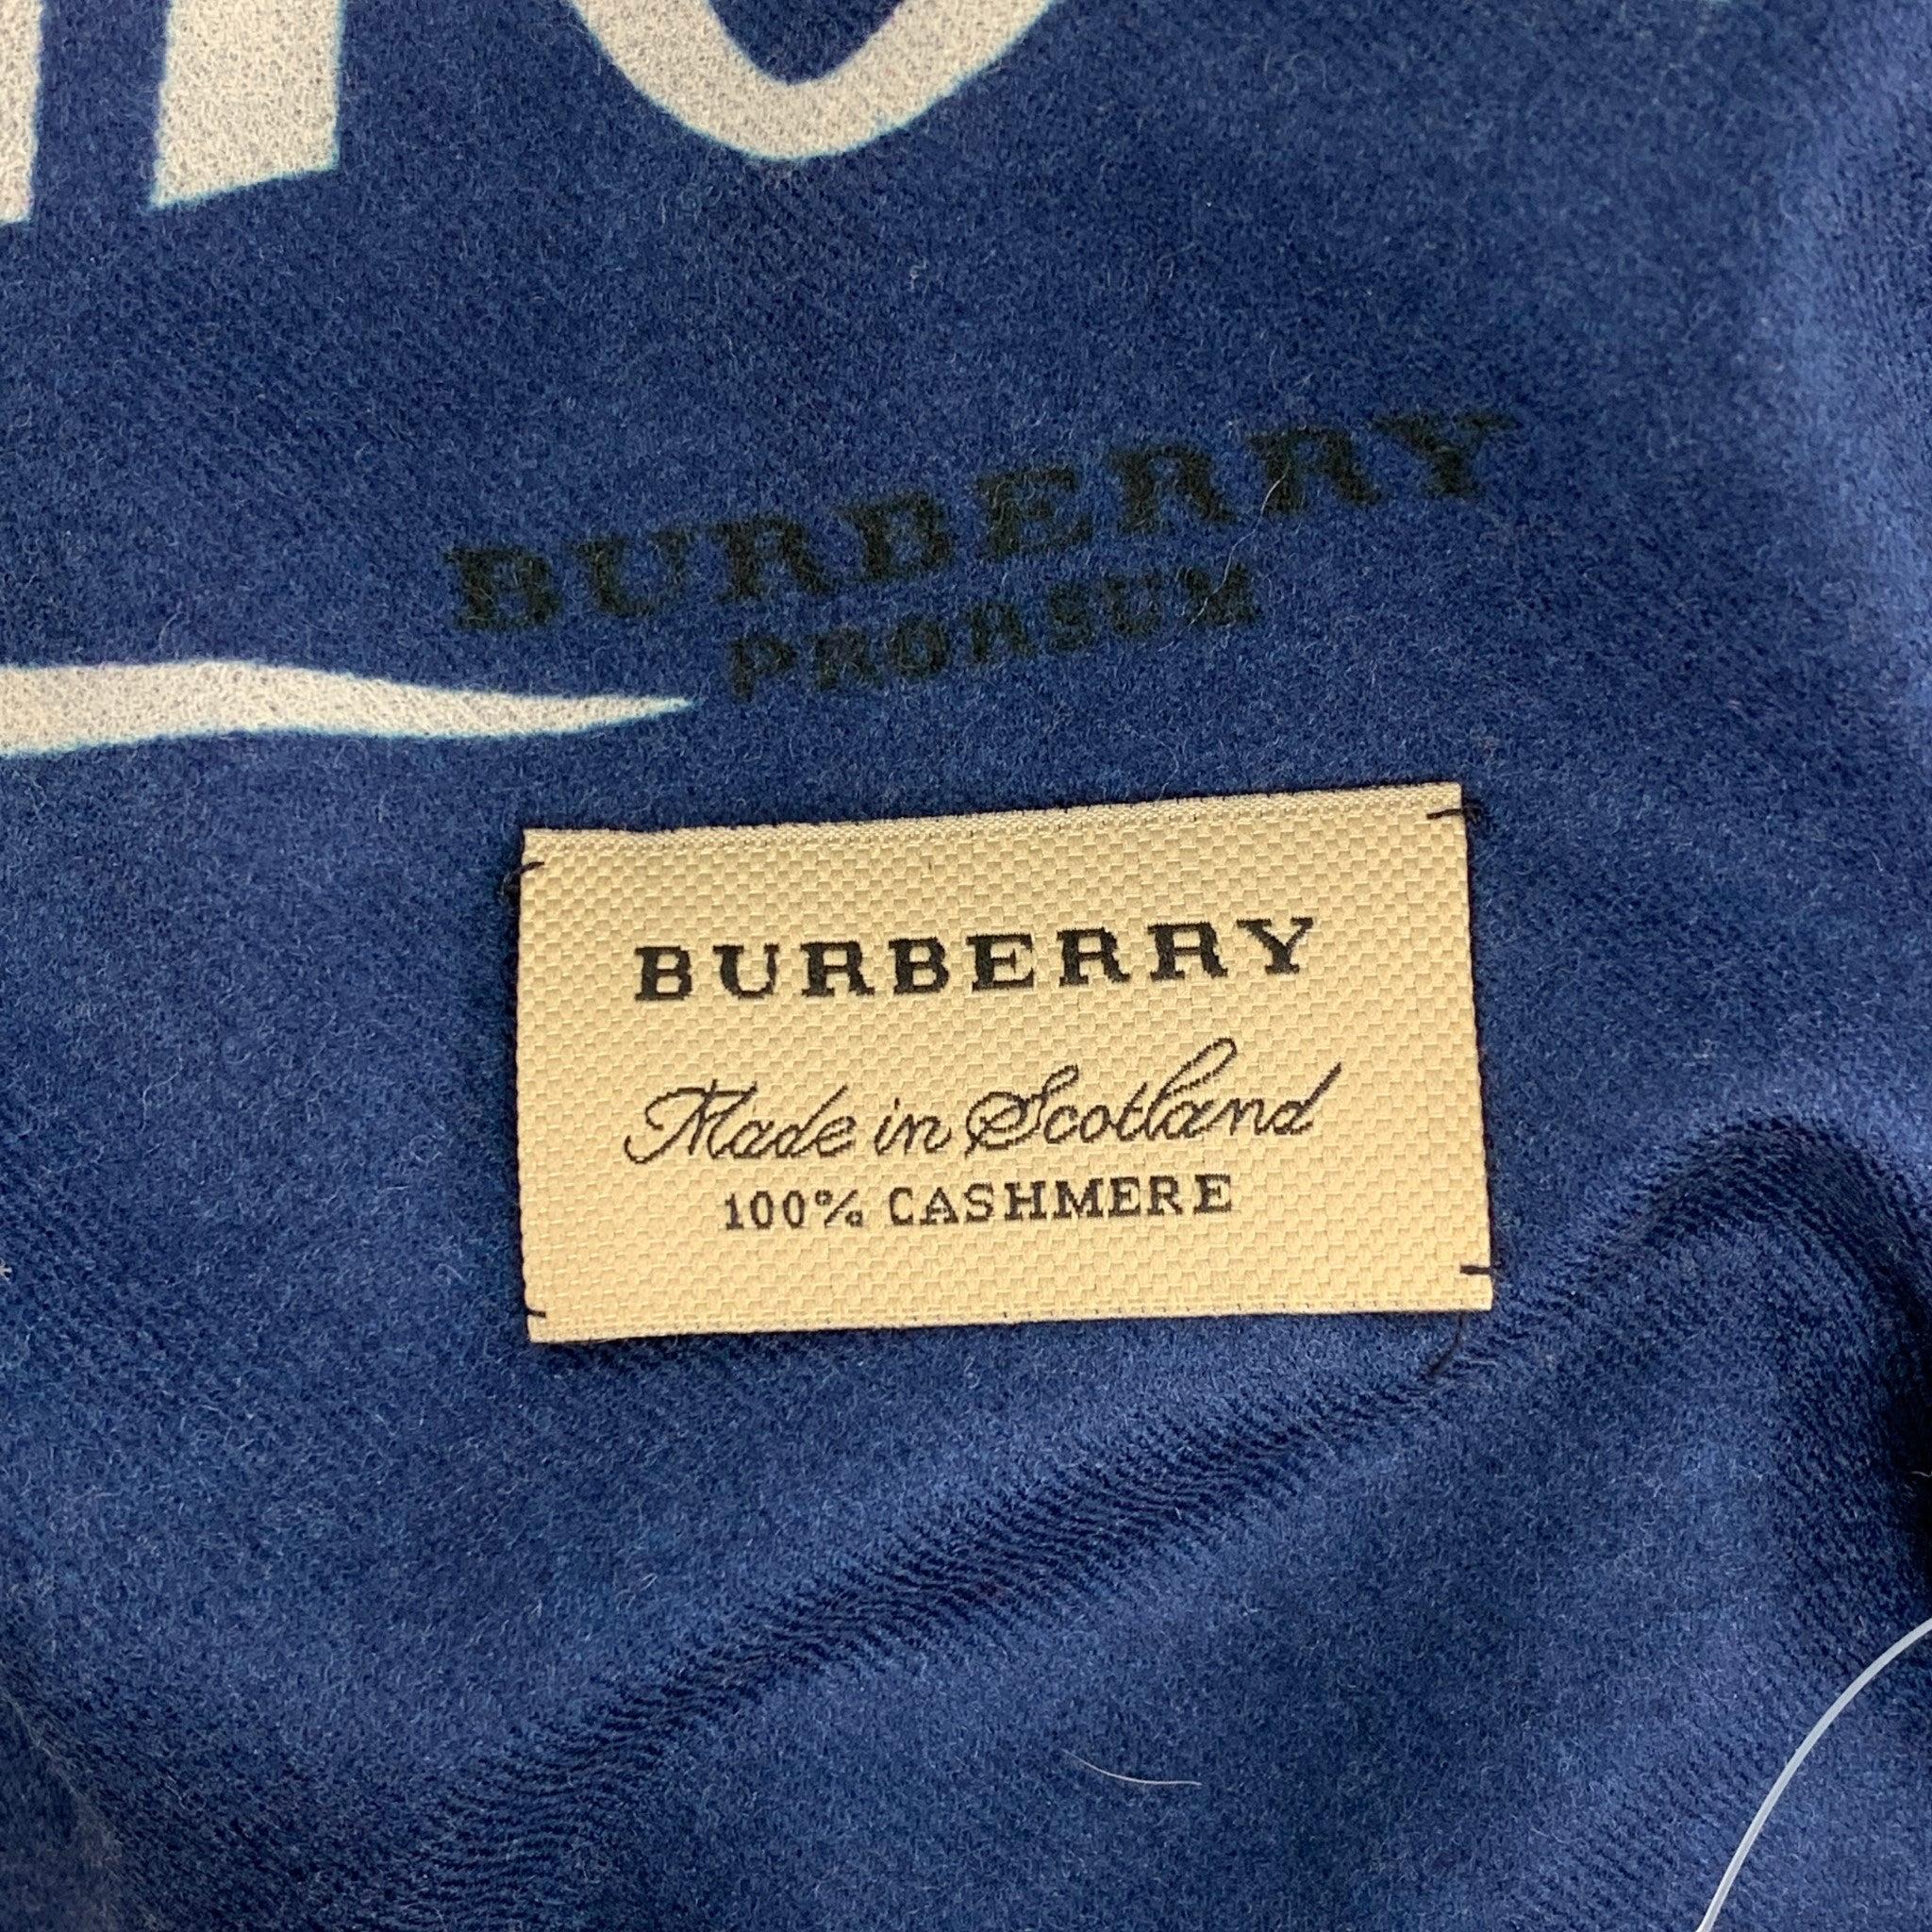 Men's BURBERRY PRORSUM Spring 2015 Size One Size Blue & White Script Cashmere Scarf For Sale